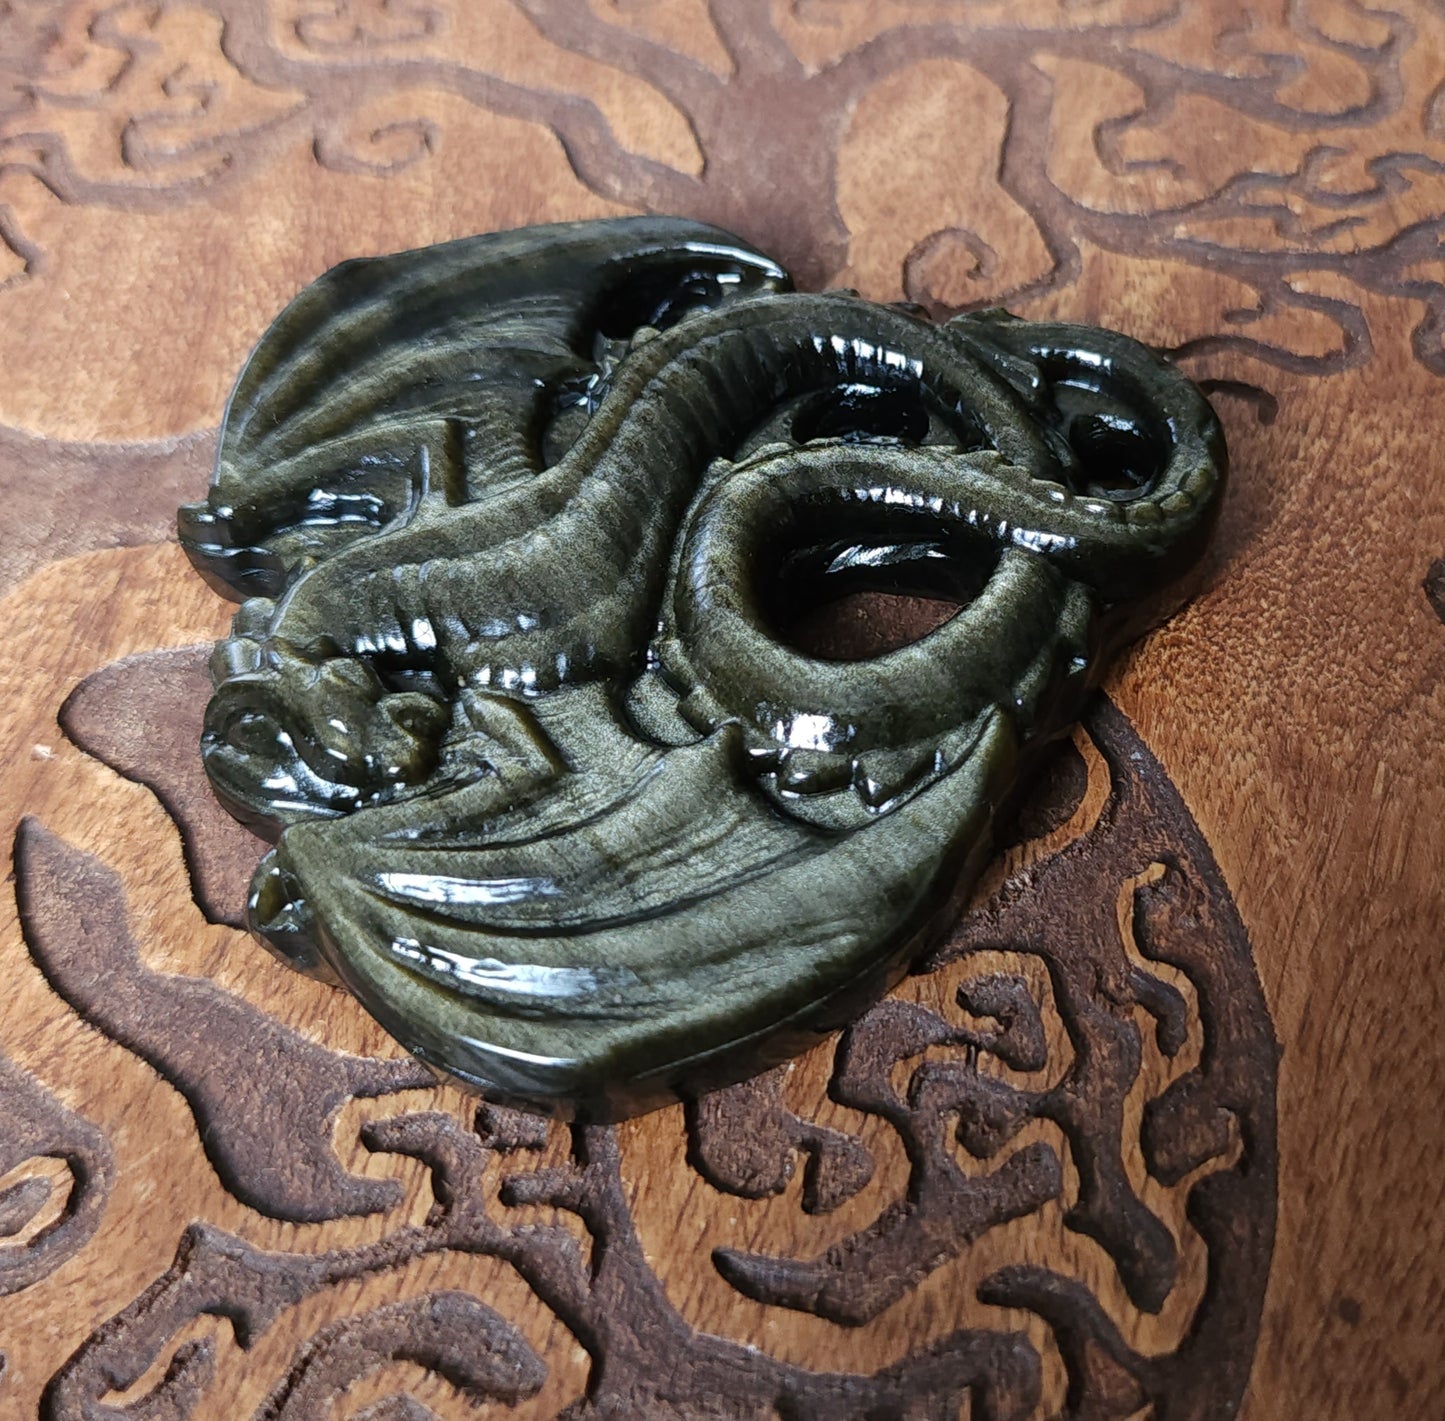 Gold Sheen Obsidian Dragon